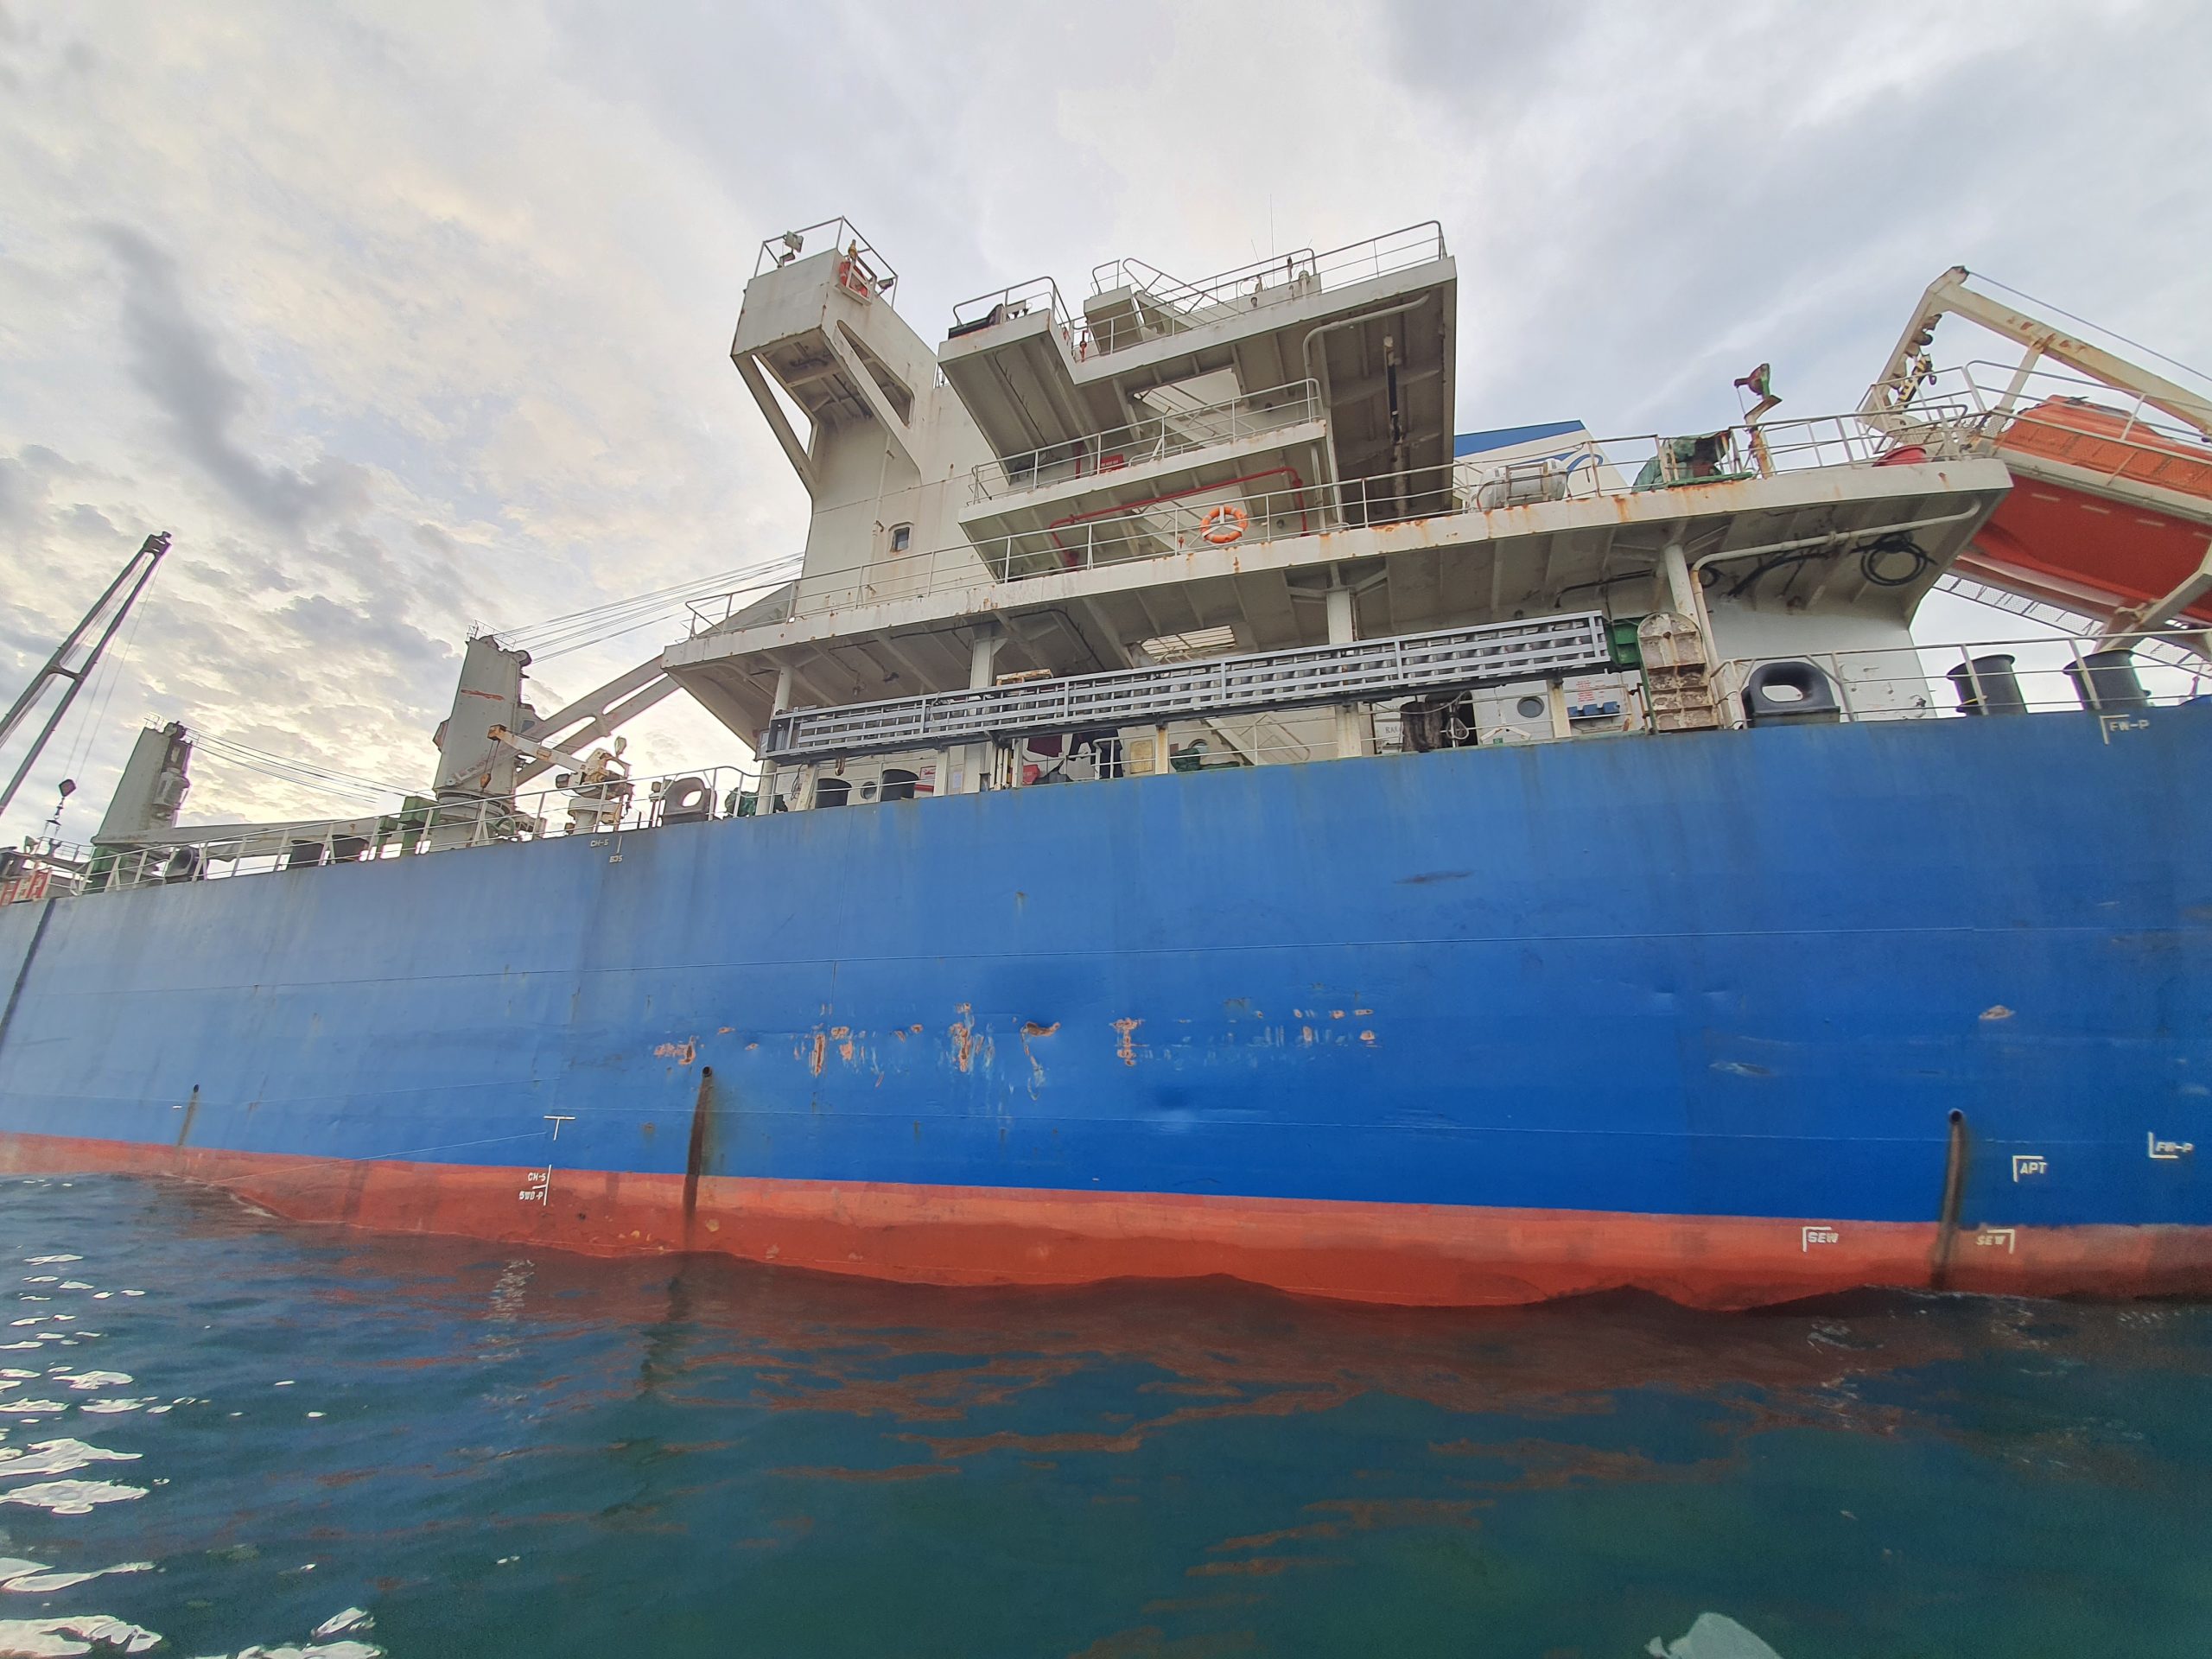 Damage Survey of Cargo Vessel